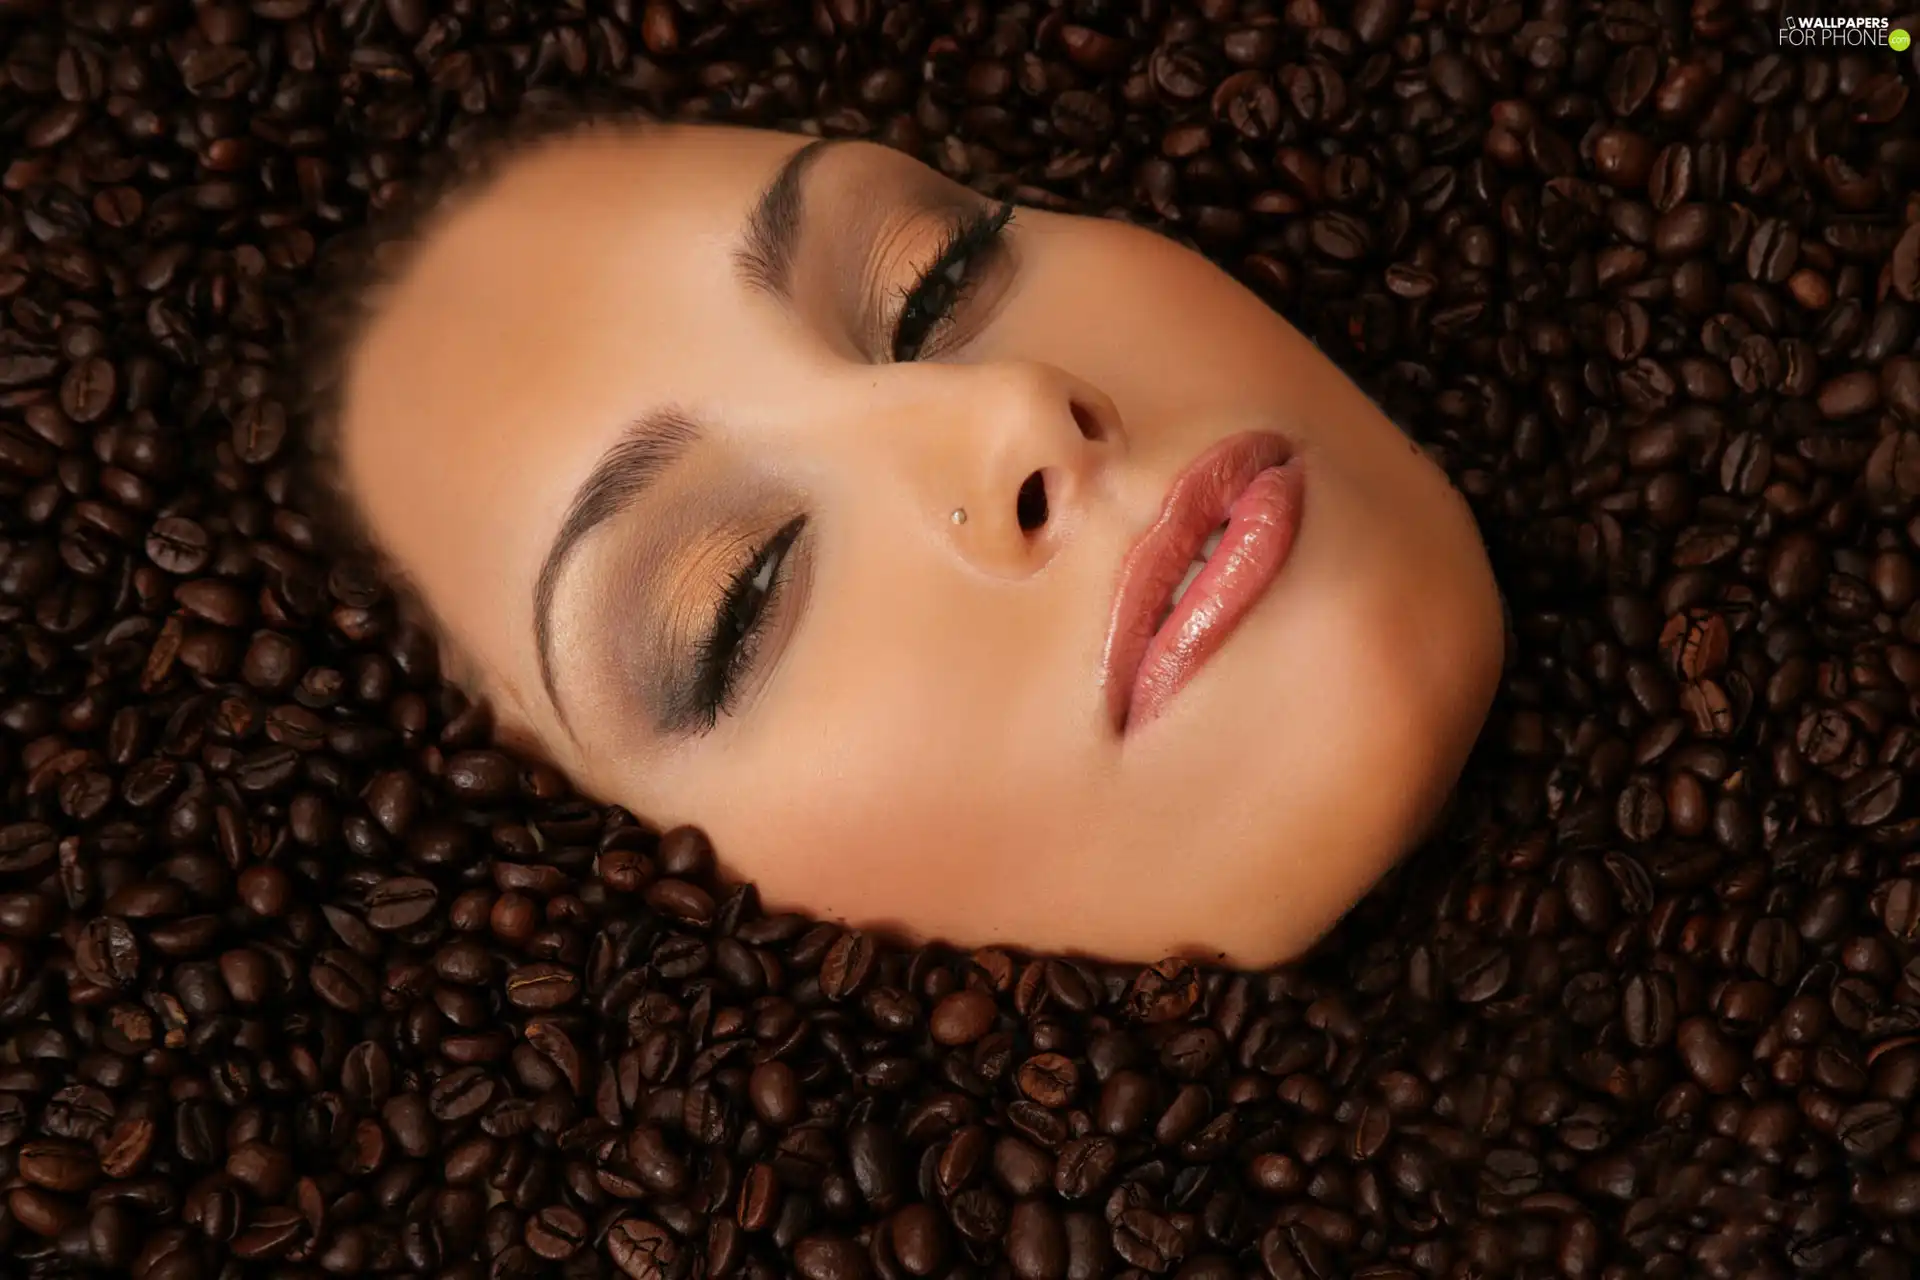 woman, grains, coffee, face